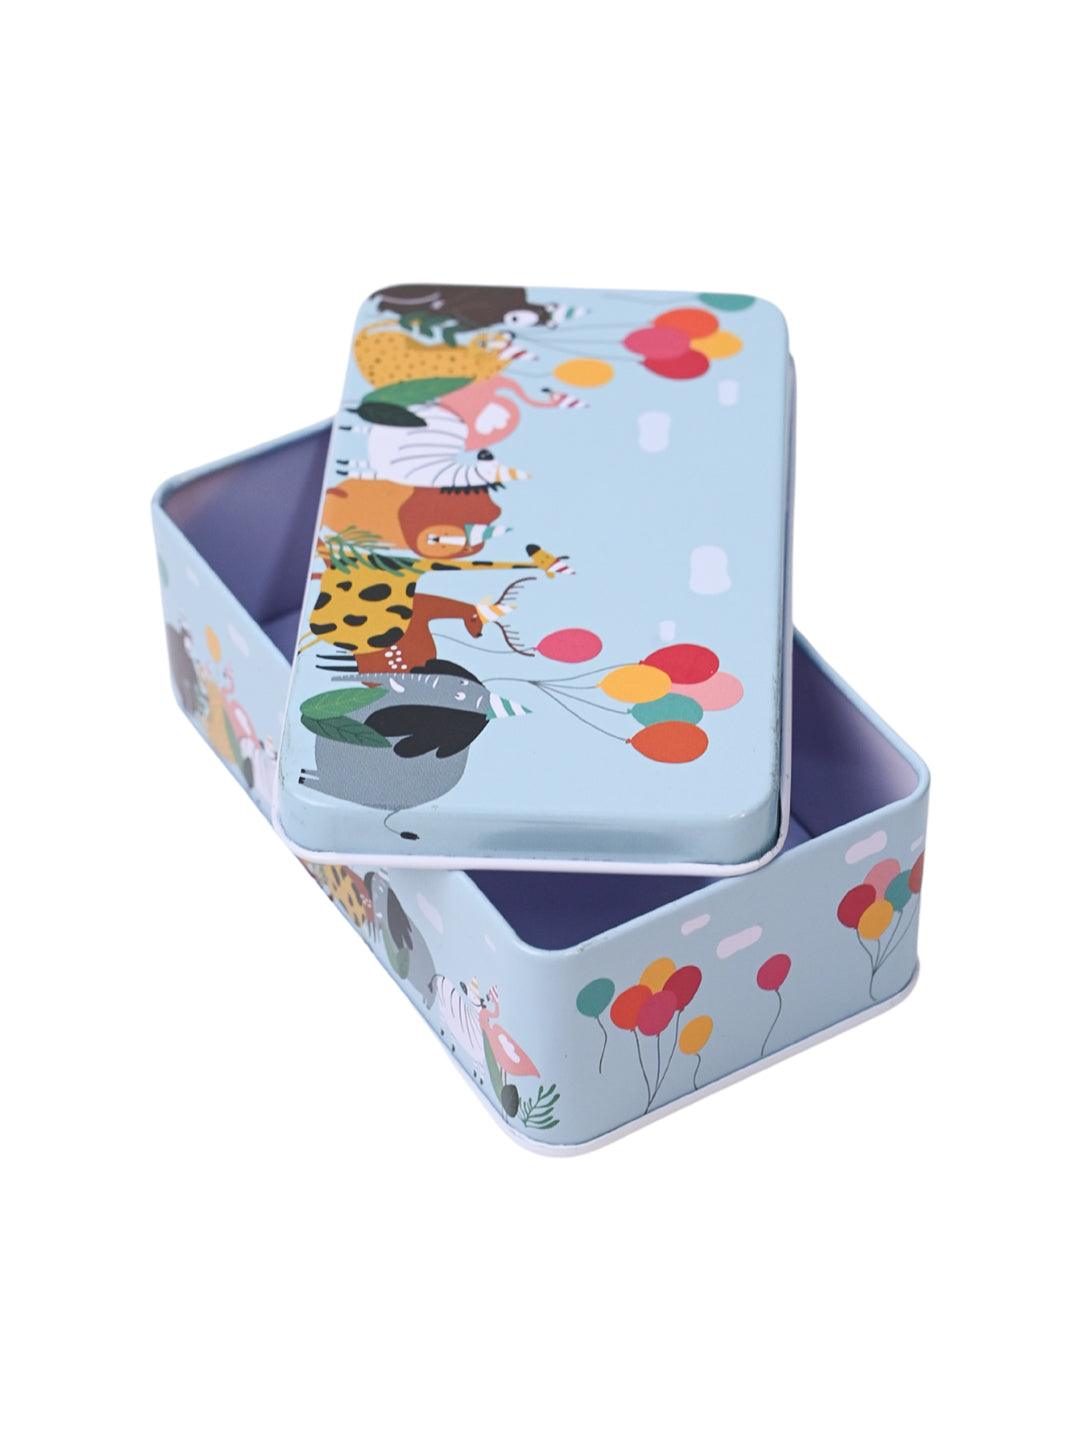 Mini Animal Print Tin Storage Box - Set Of 3, Sky Blue - MARKET99